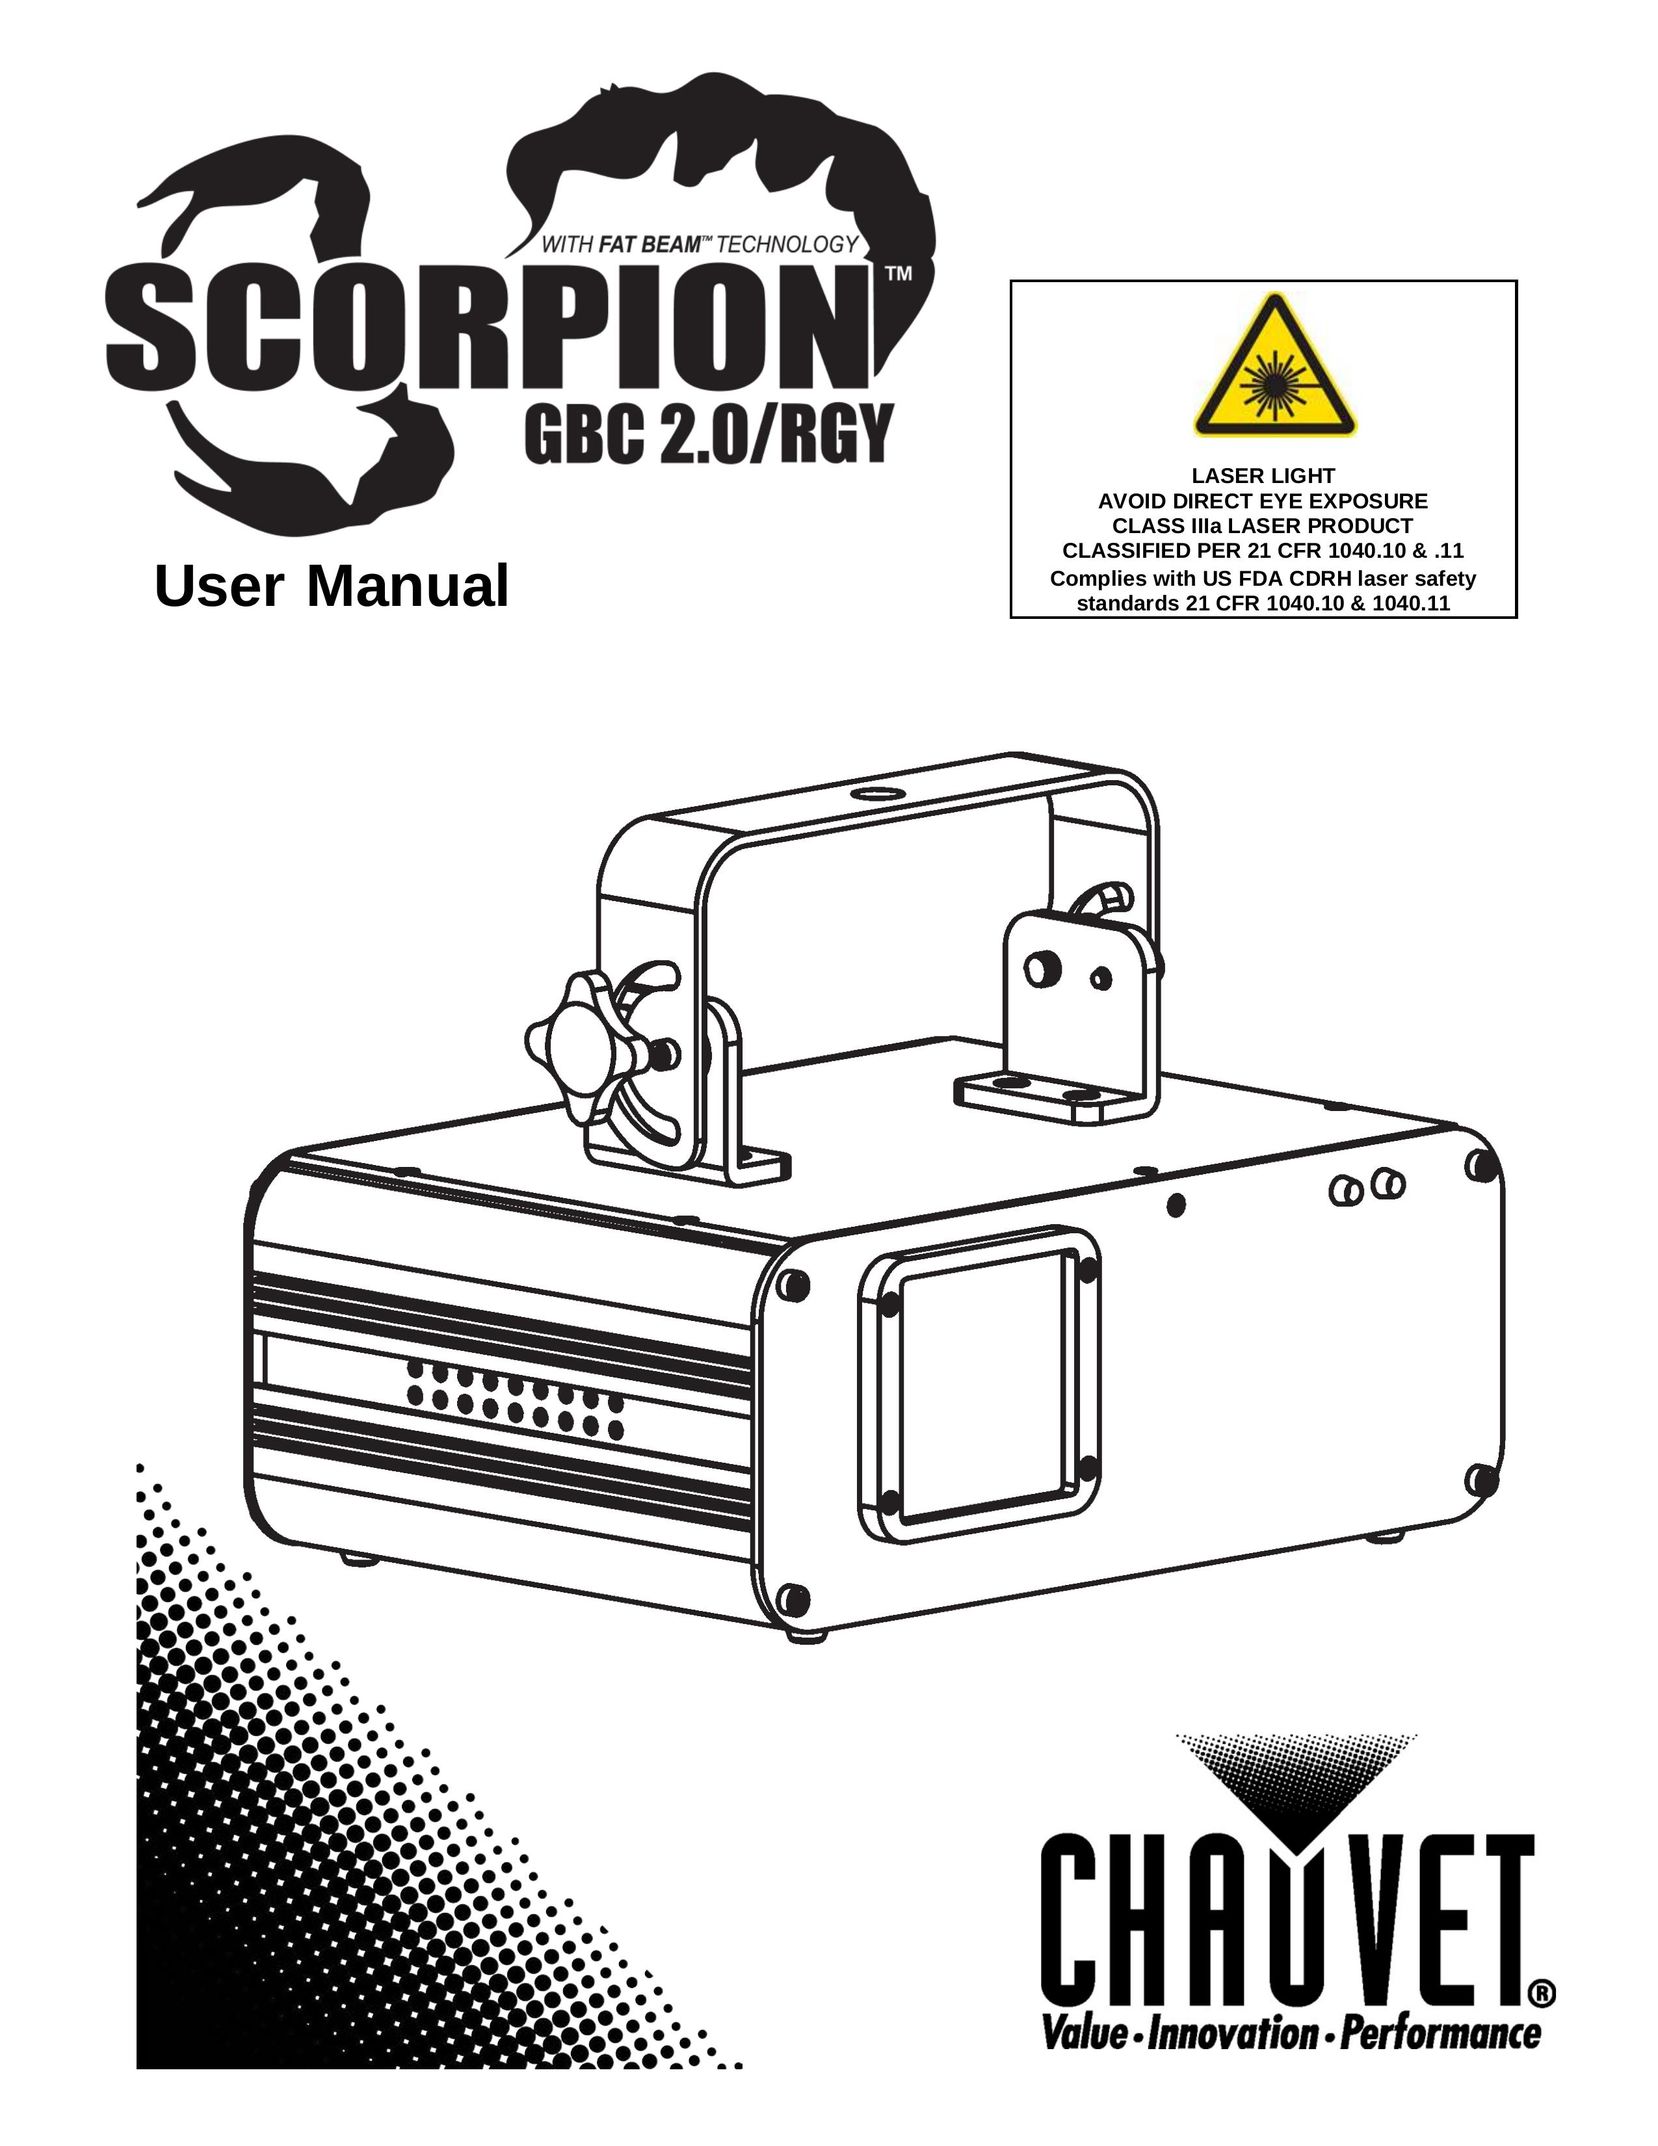 Chauvet GBC 2.0 DVD Player User Manual